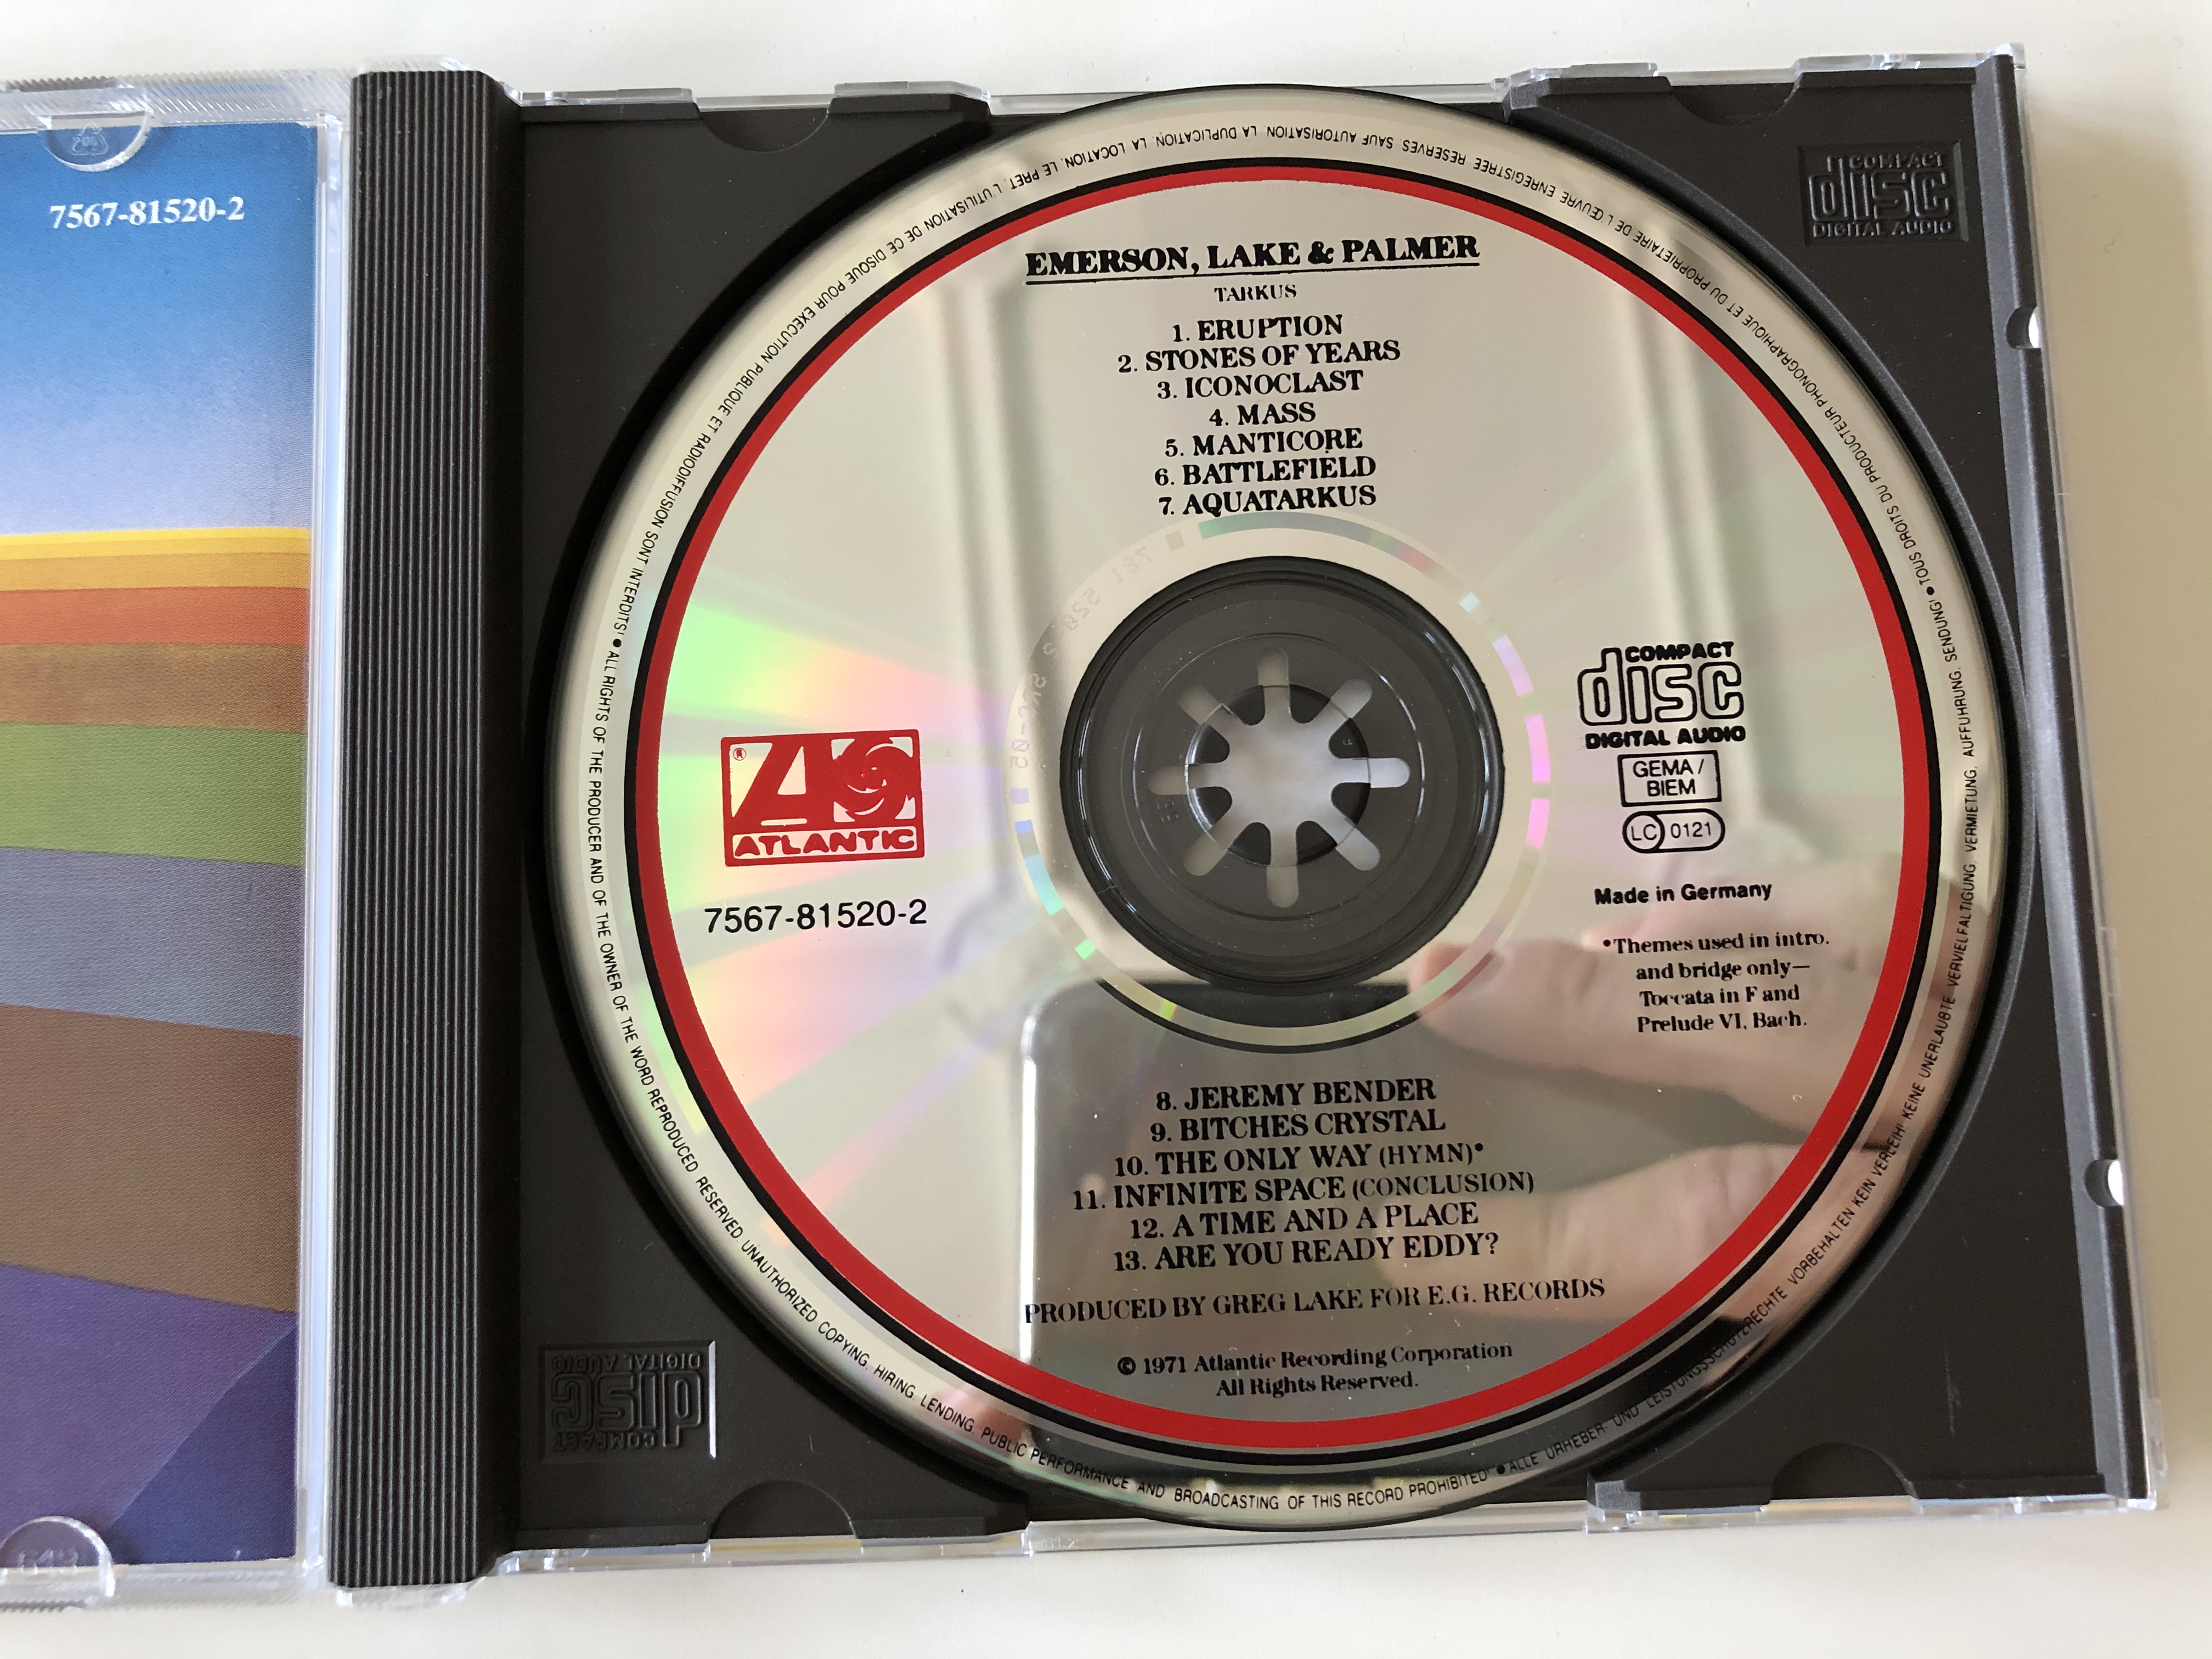 tarkus-atlantic-audio-cd-1971-7567-81520-2-5-.jpg